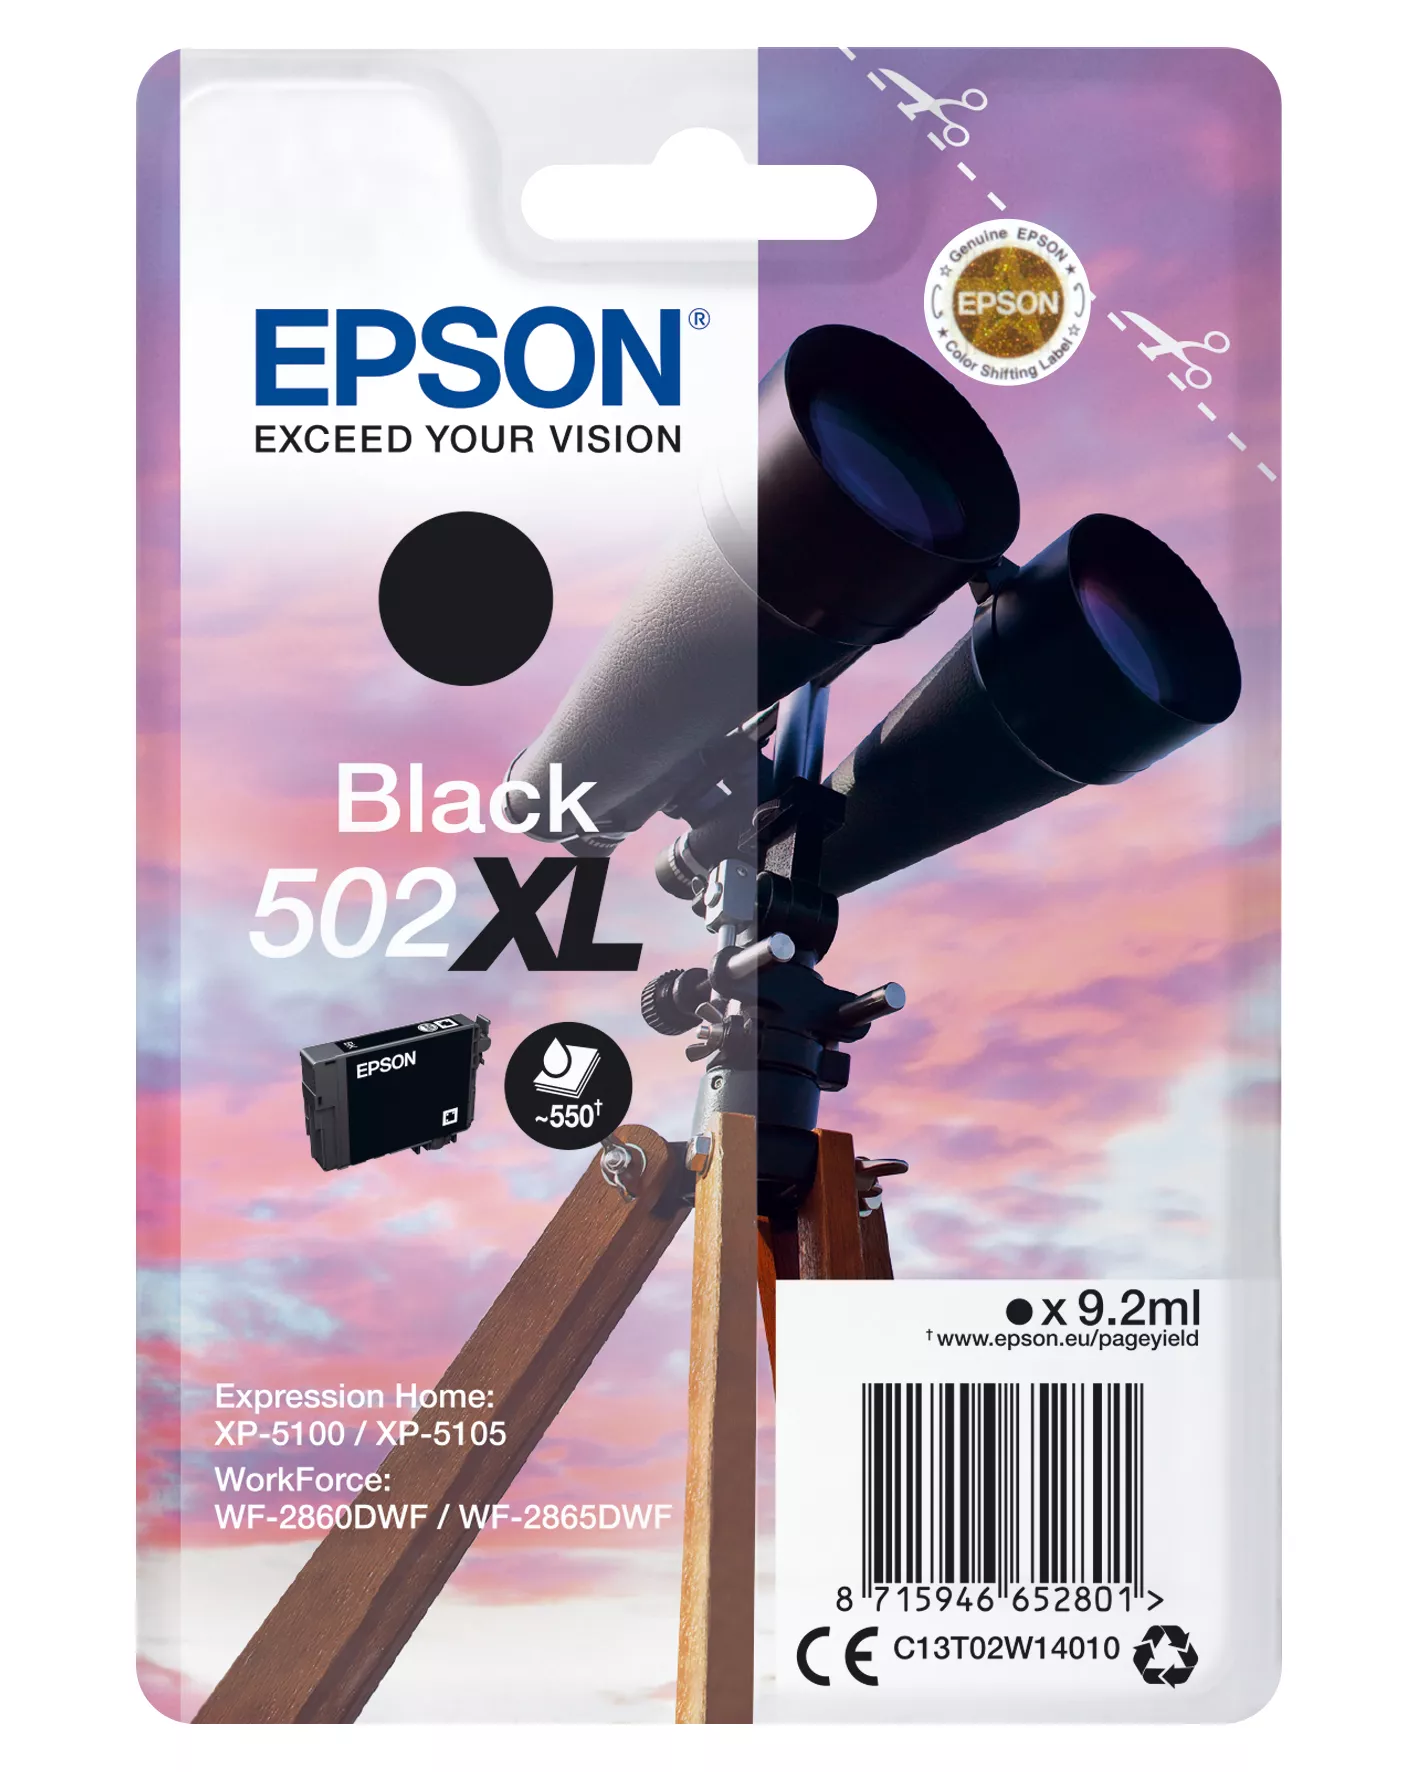 Achat EPSON Singlepack Black 502XL Ink au meilleur prix